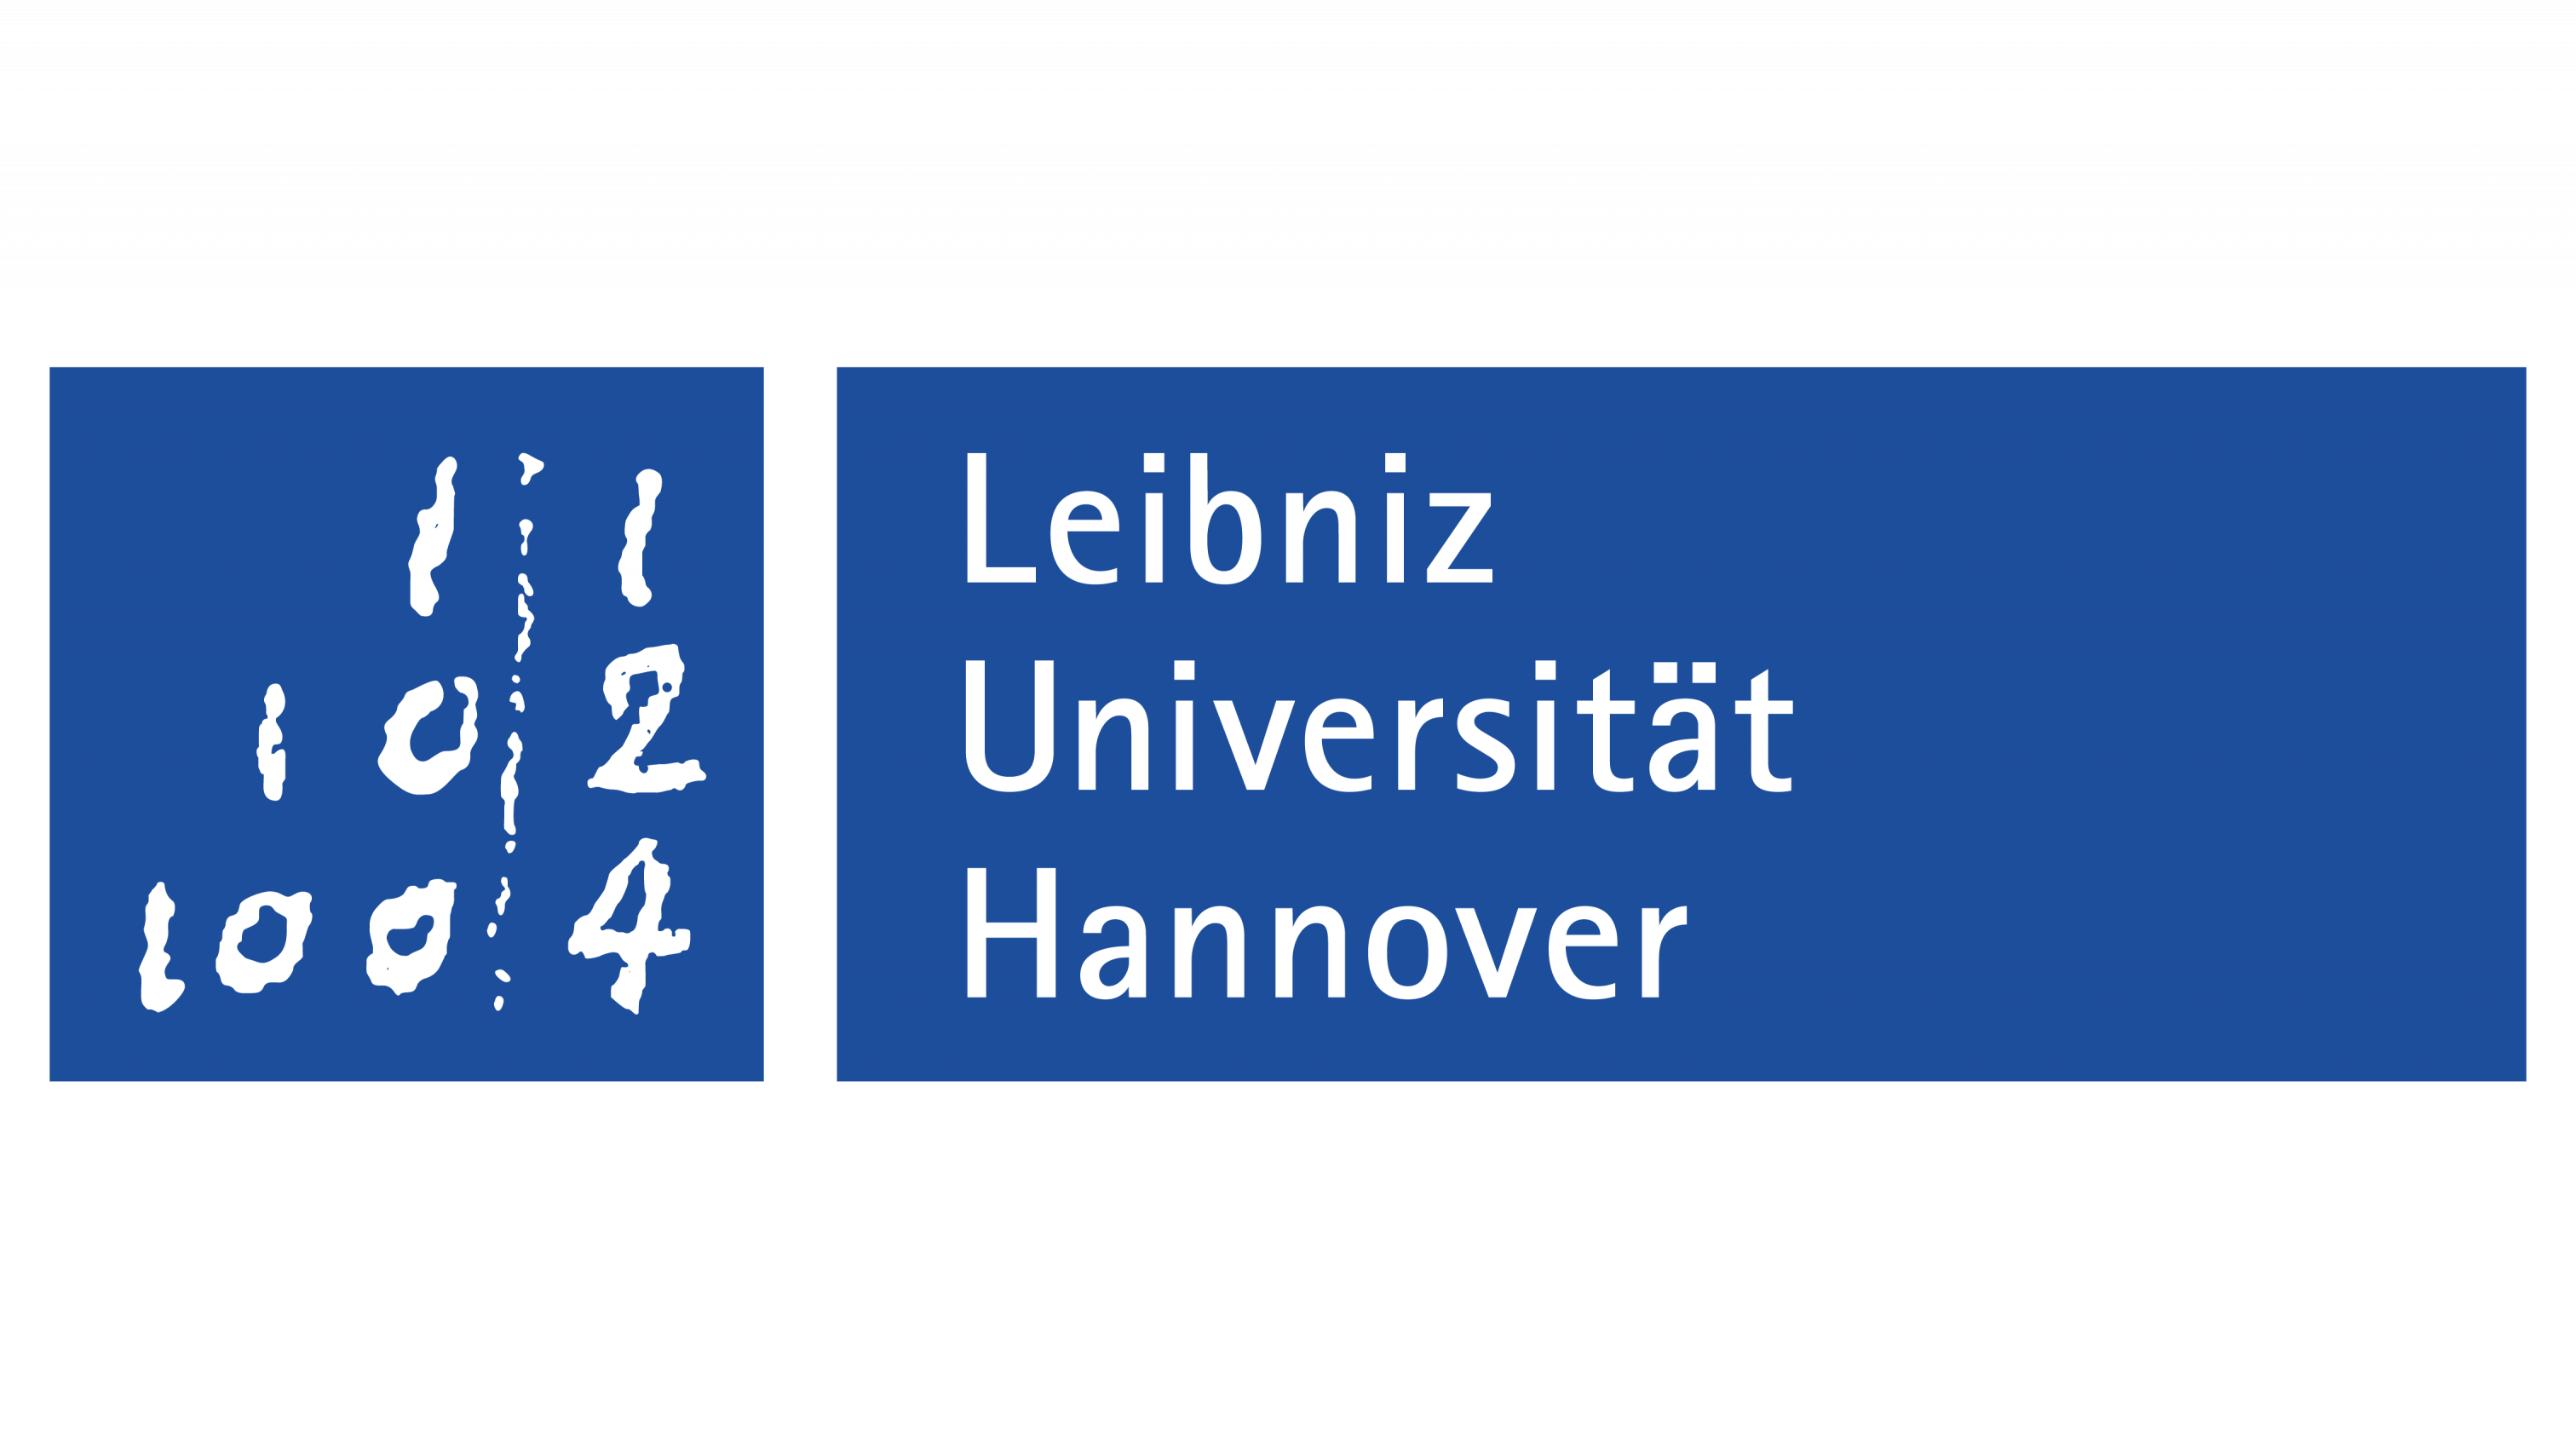 1. Leibniz universitat Hannover-01